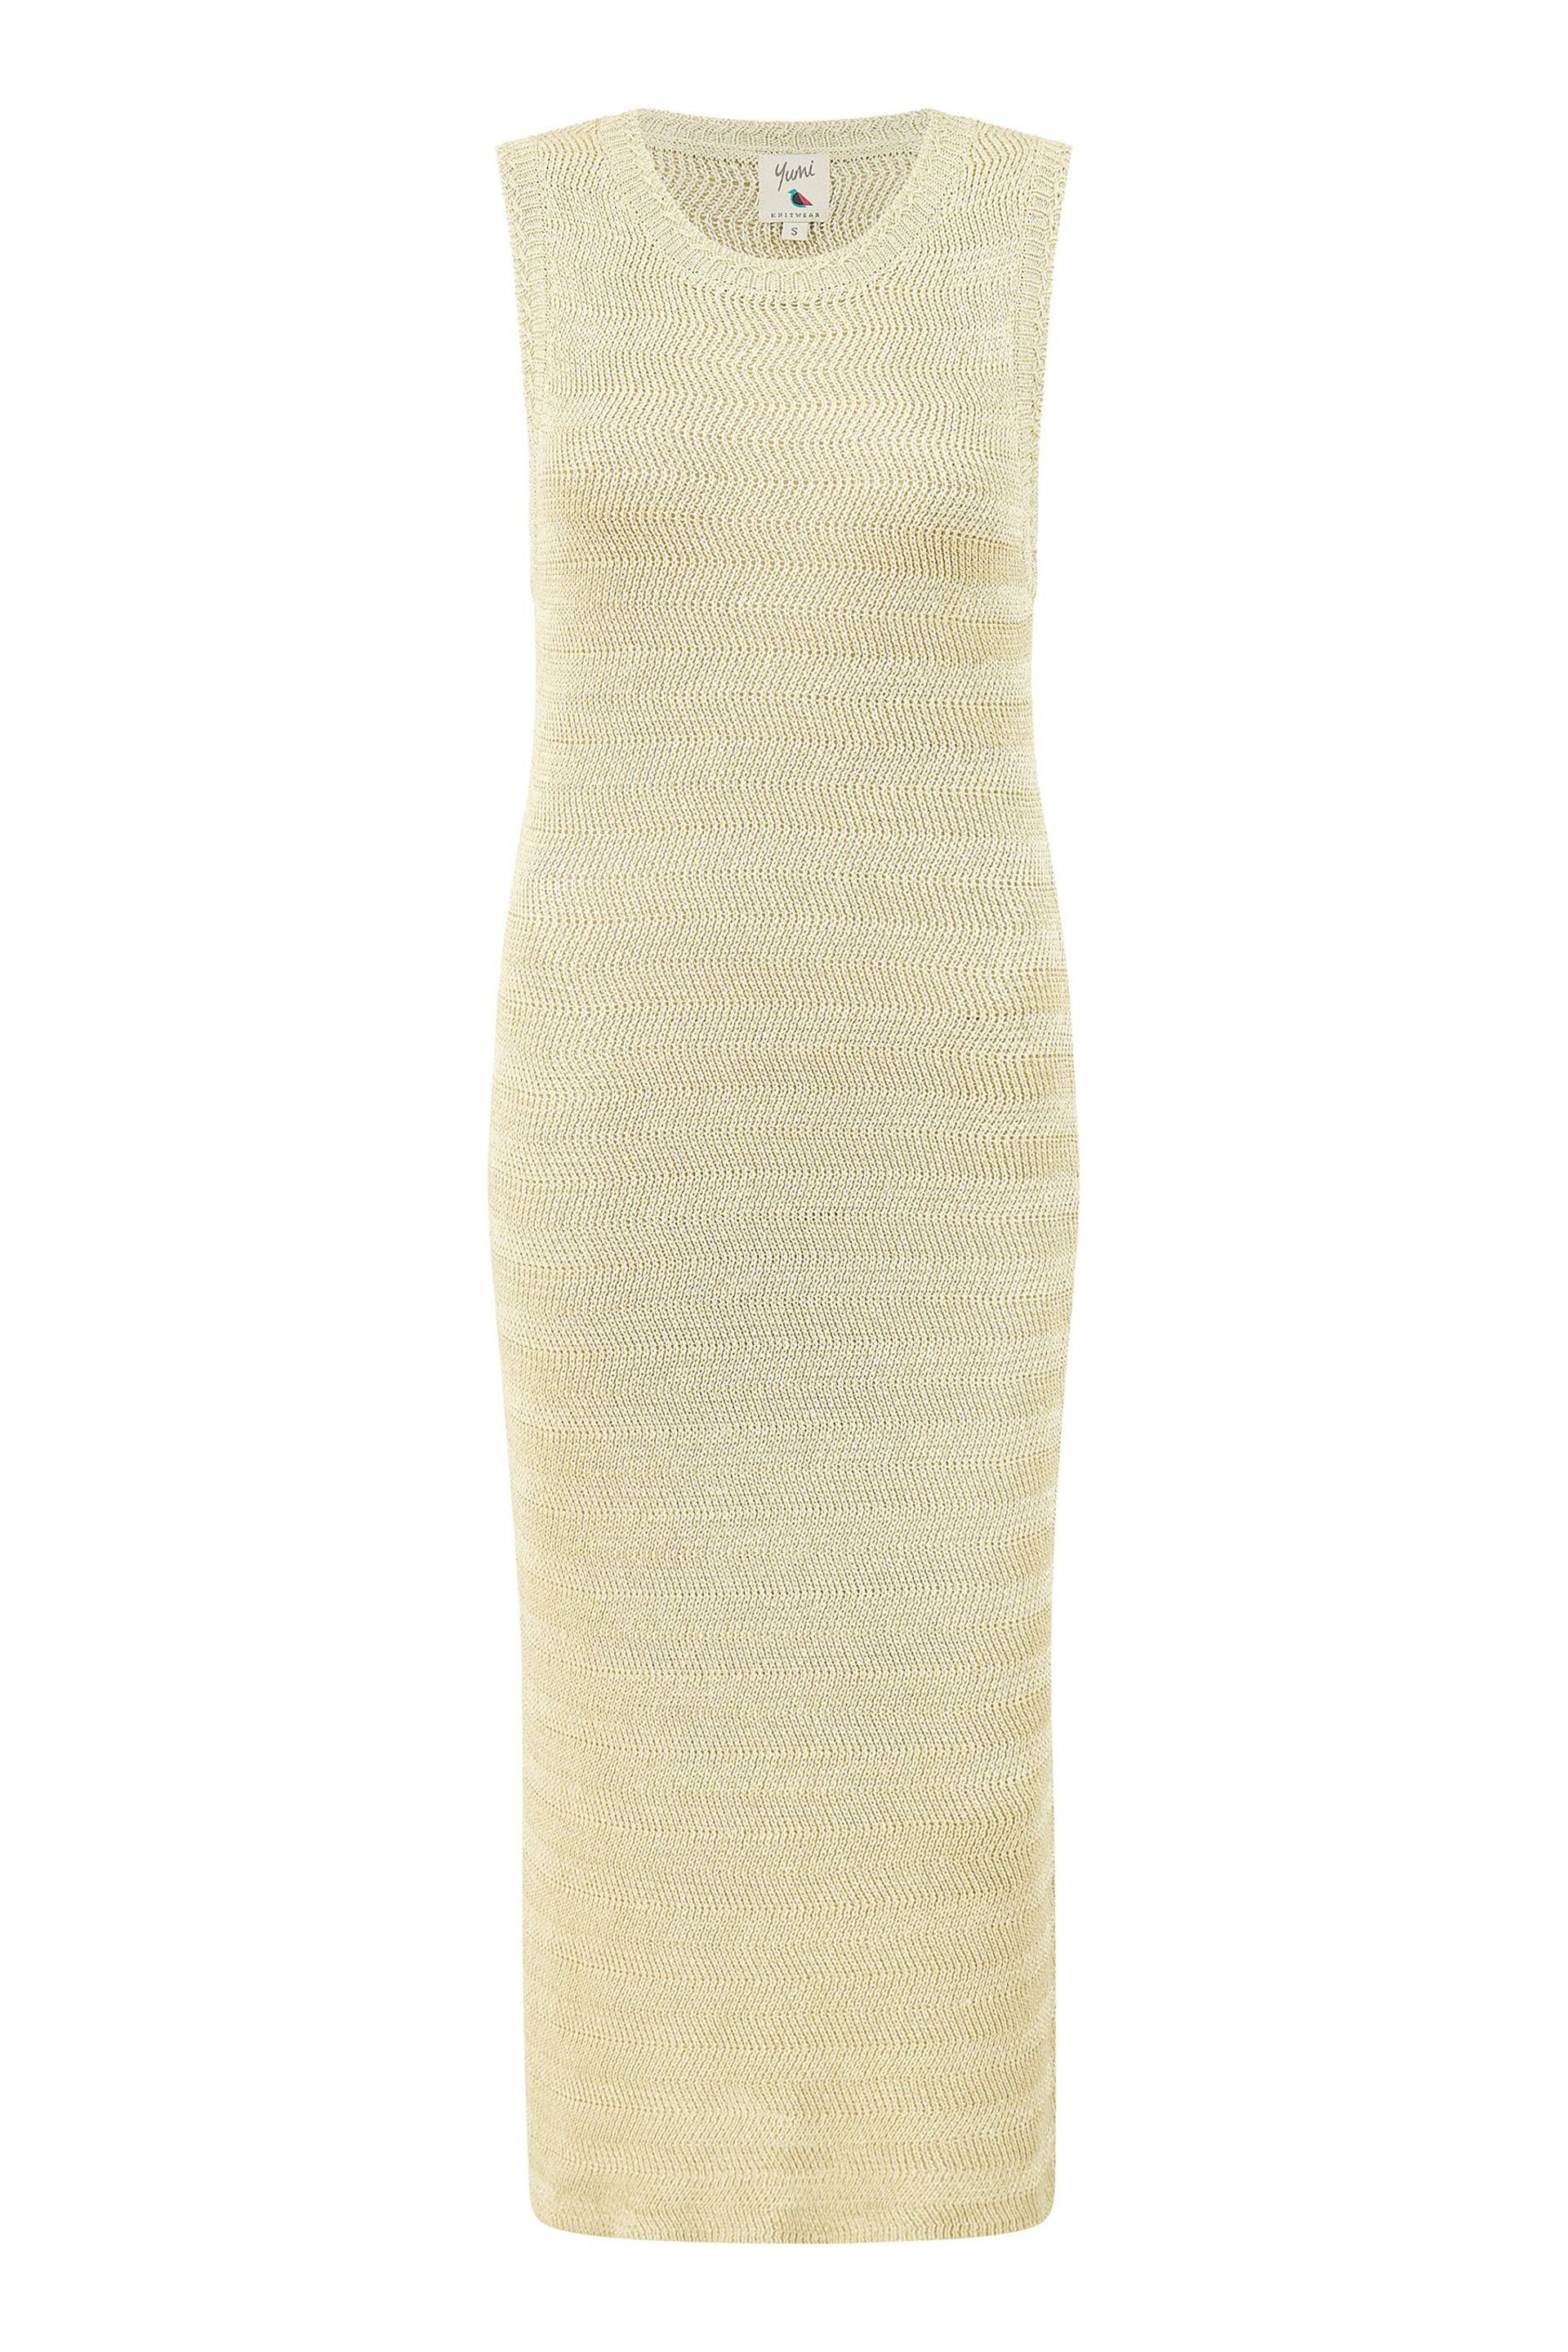 Yumi Gold Sparkle Knitted Sleeveless Midi Dress - Image 5 of 5